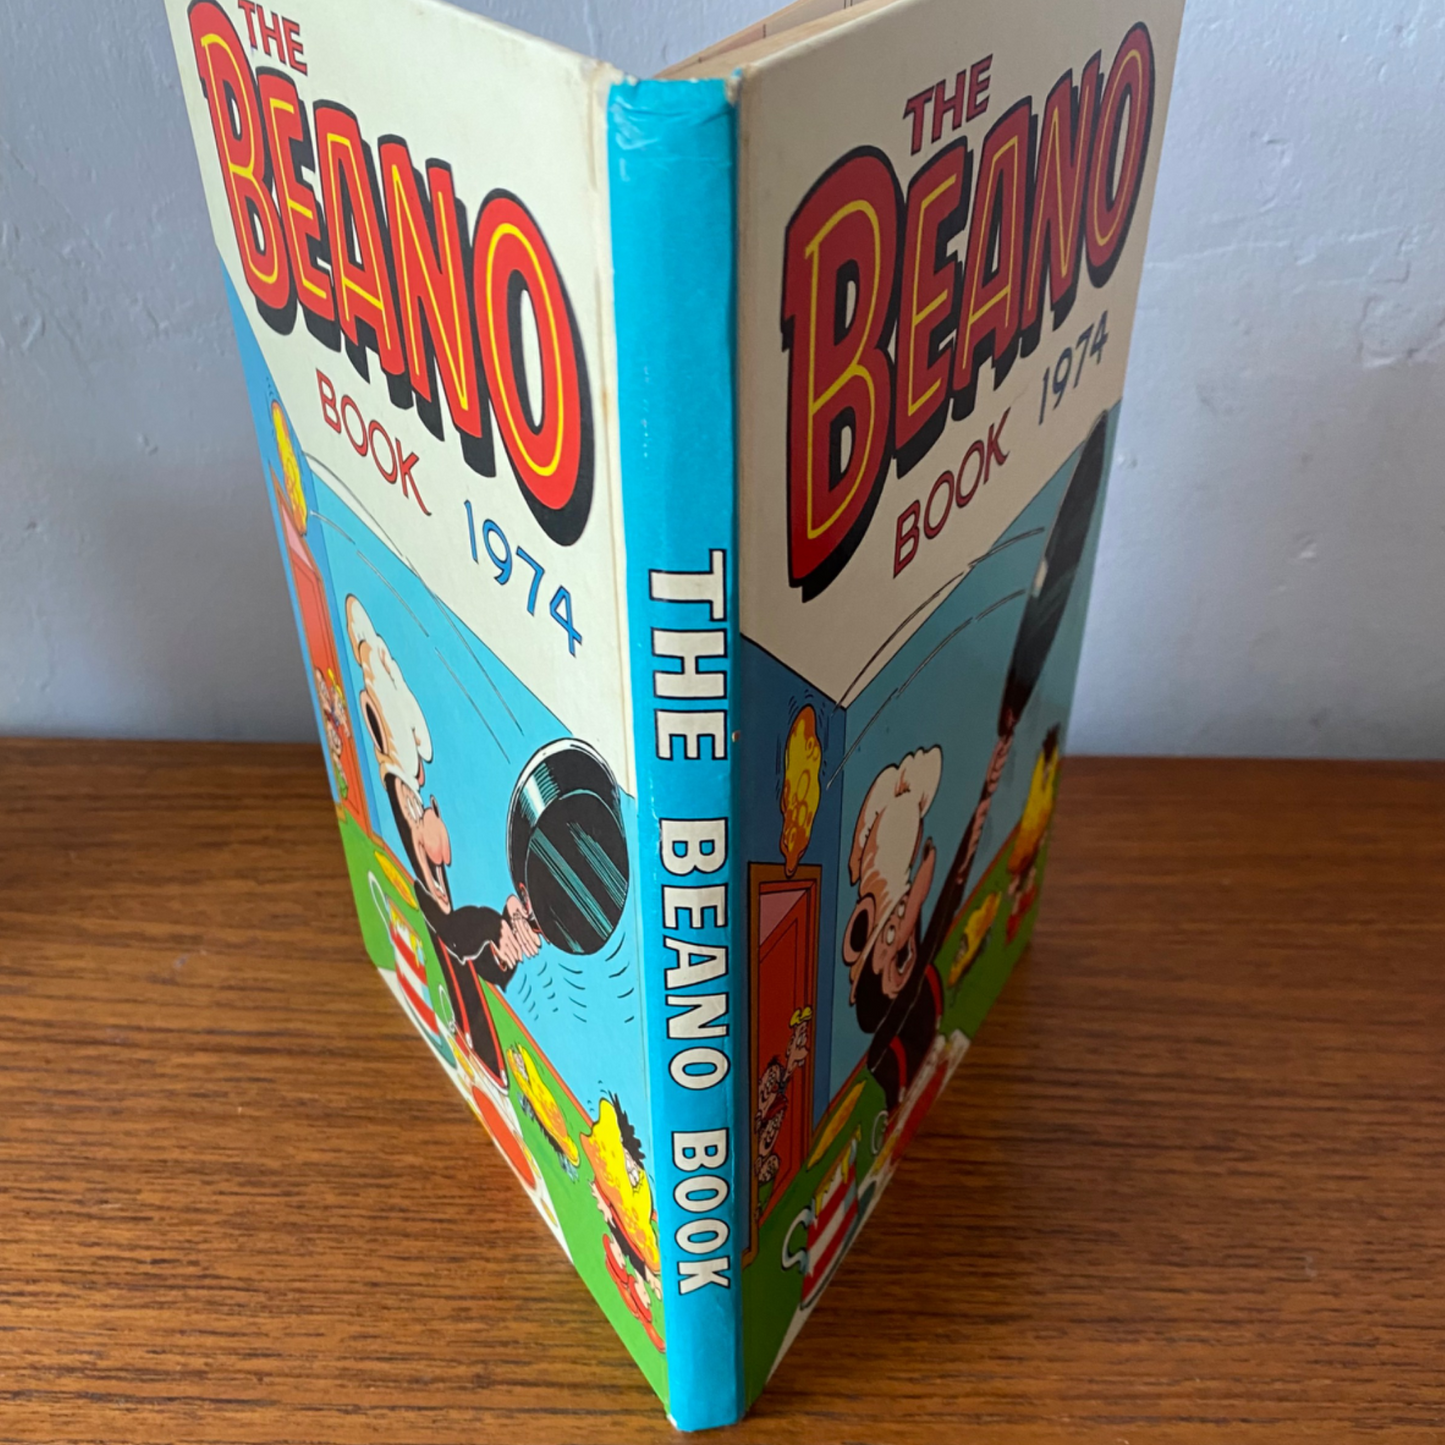 Vintage Beano Annual 1974  . Great nostalgic gift idea